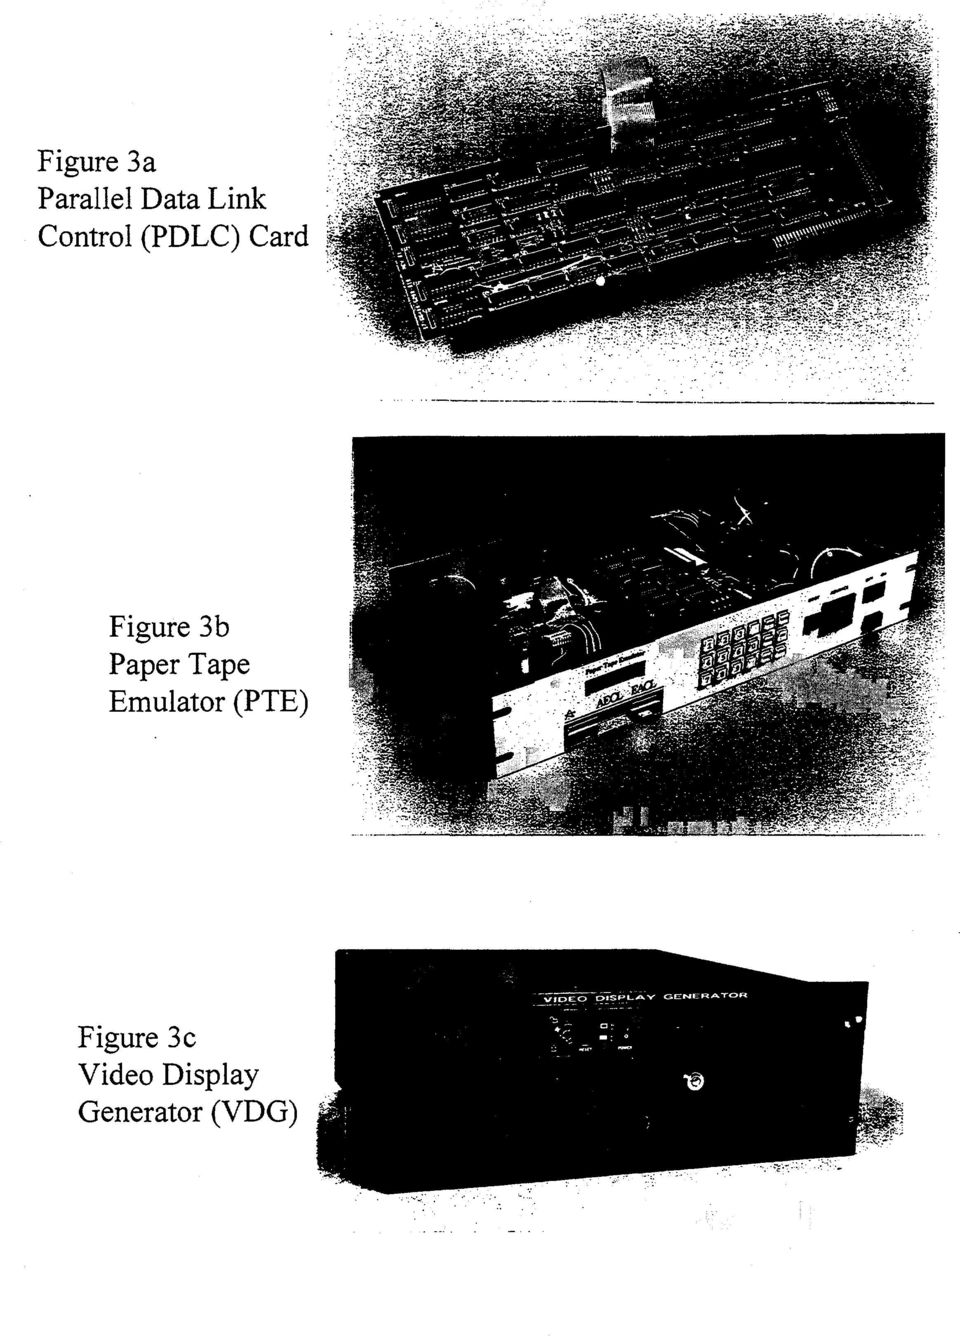 Paper Tape Emulator (PTE)